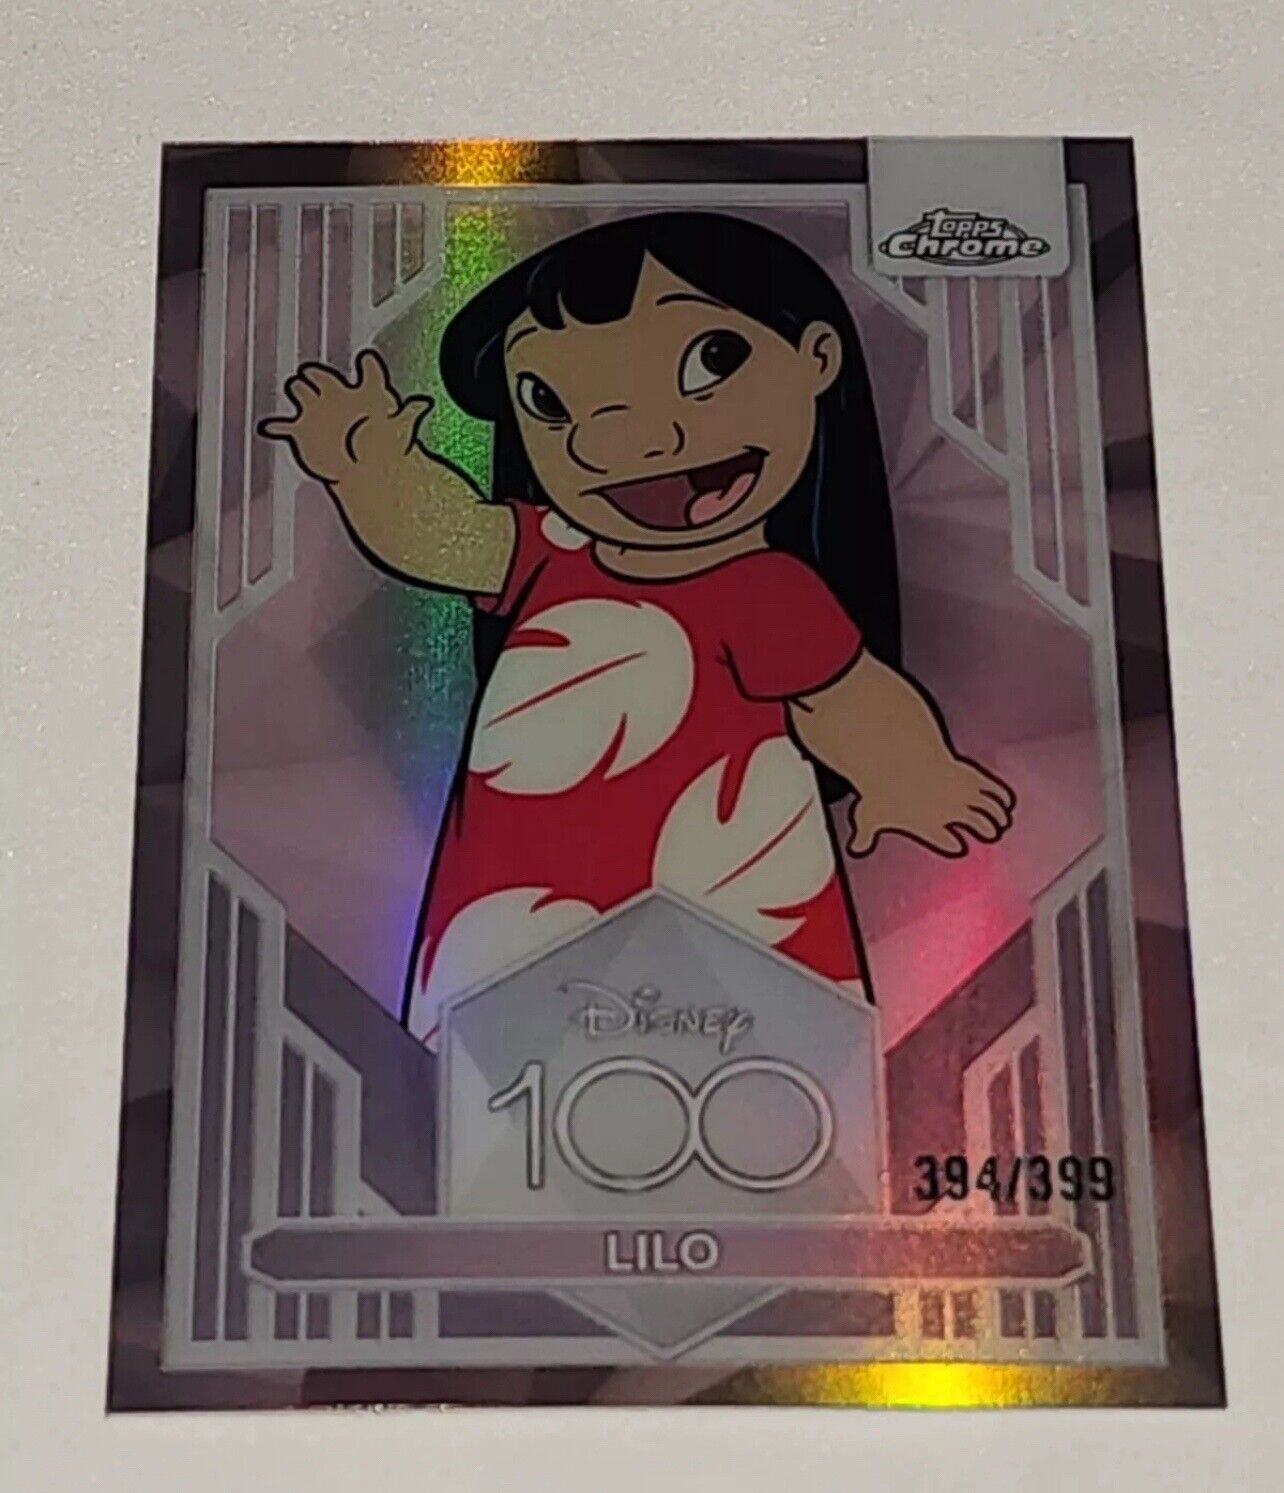 Topps Chrome Disney 100 Lilo Refractor Pink /399